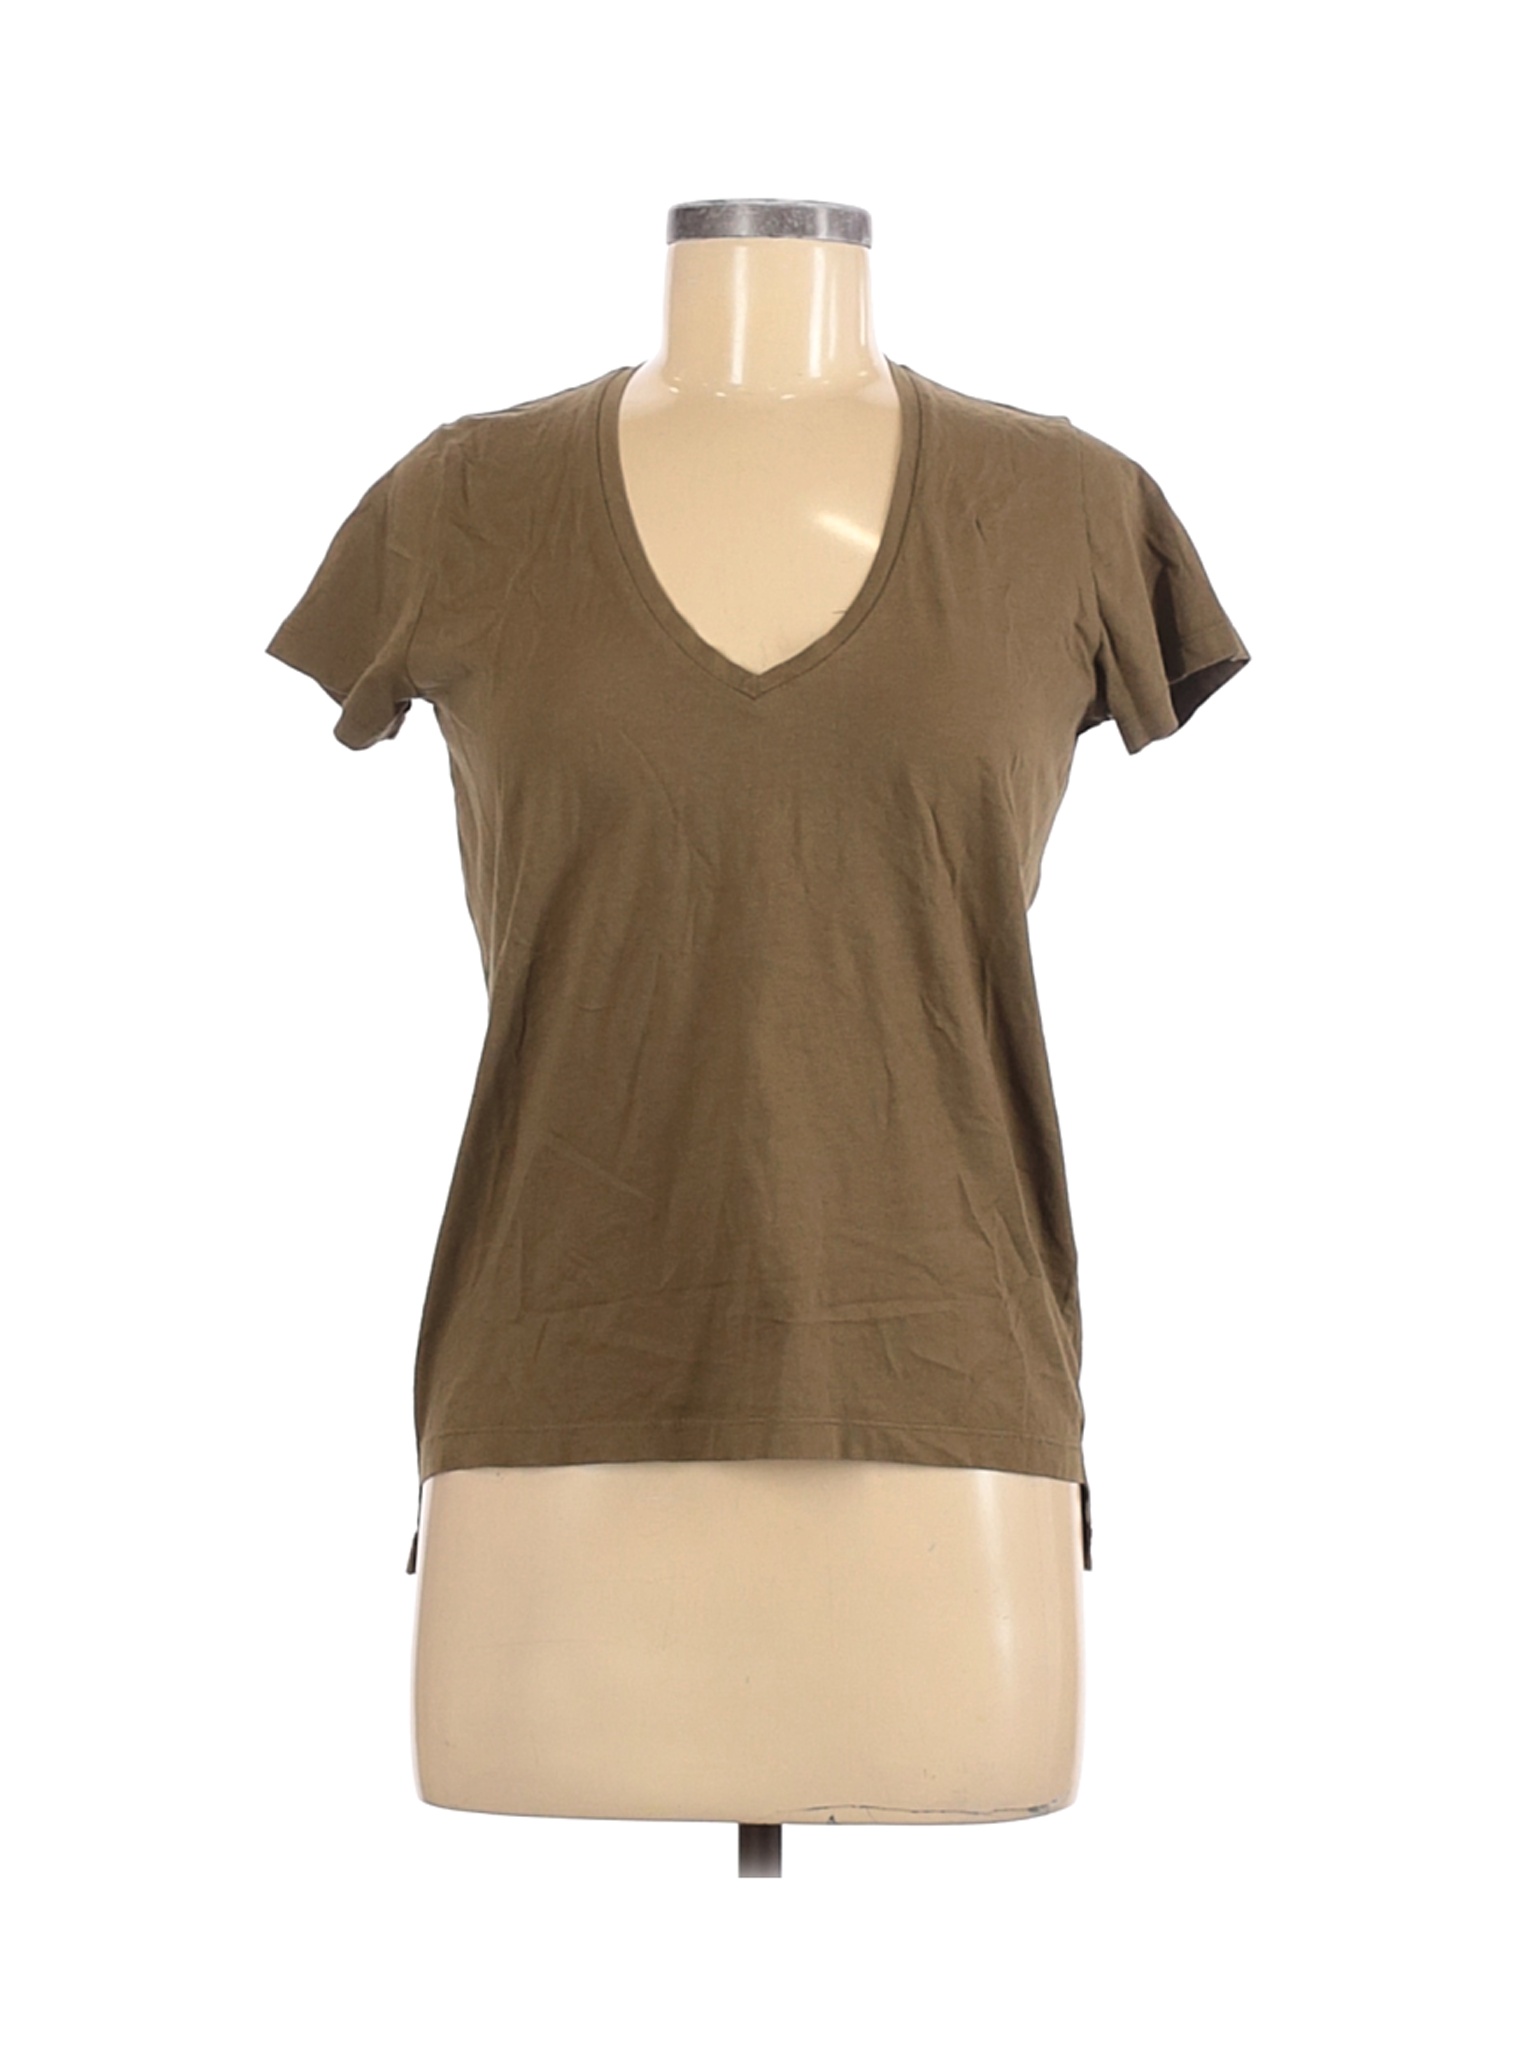 Zara W&B Collection Women Green Short Sleeve T-Shirt M | eBay